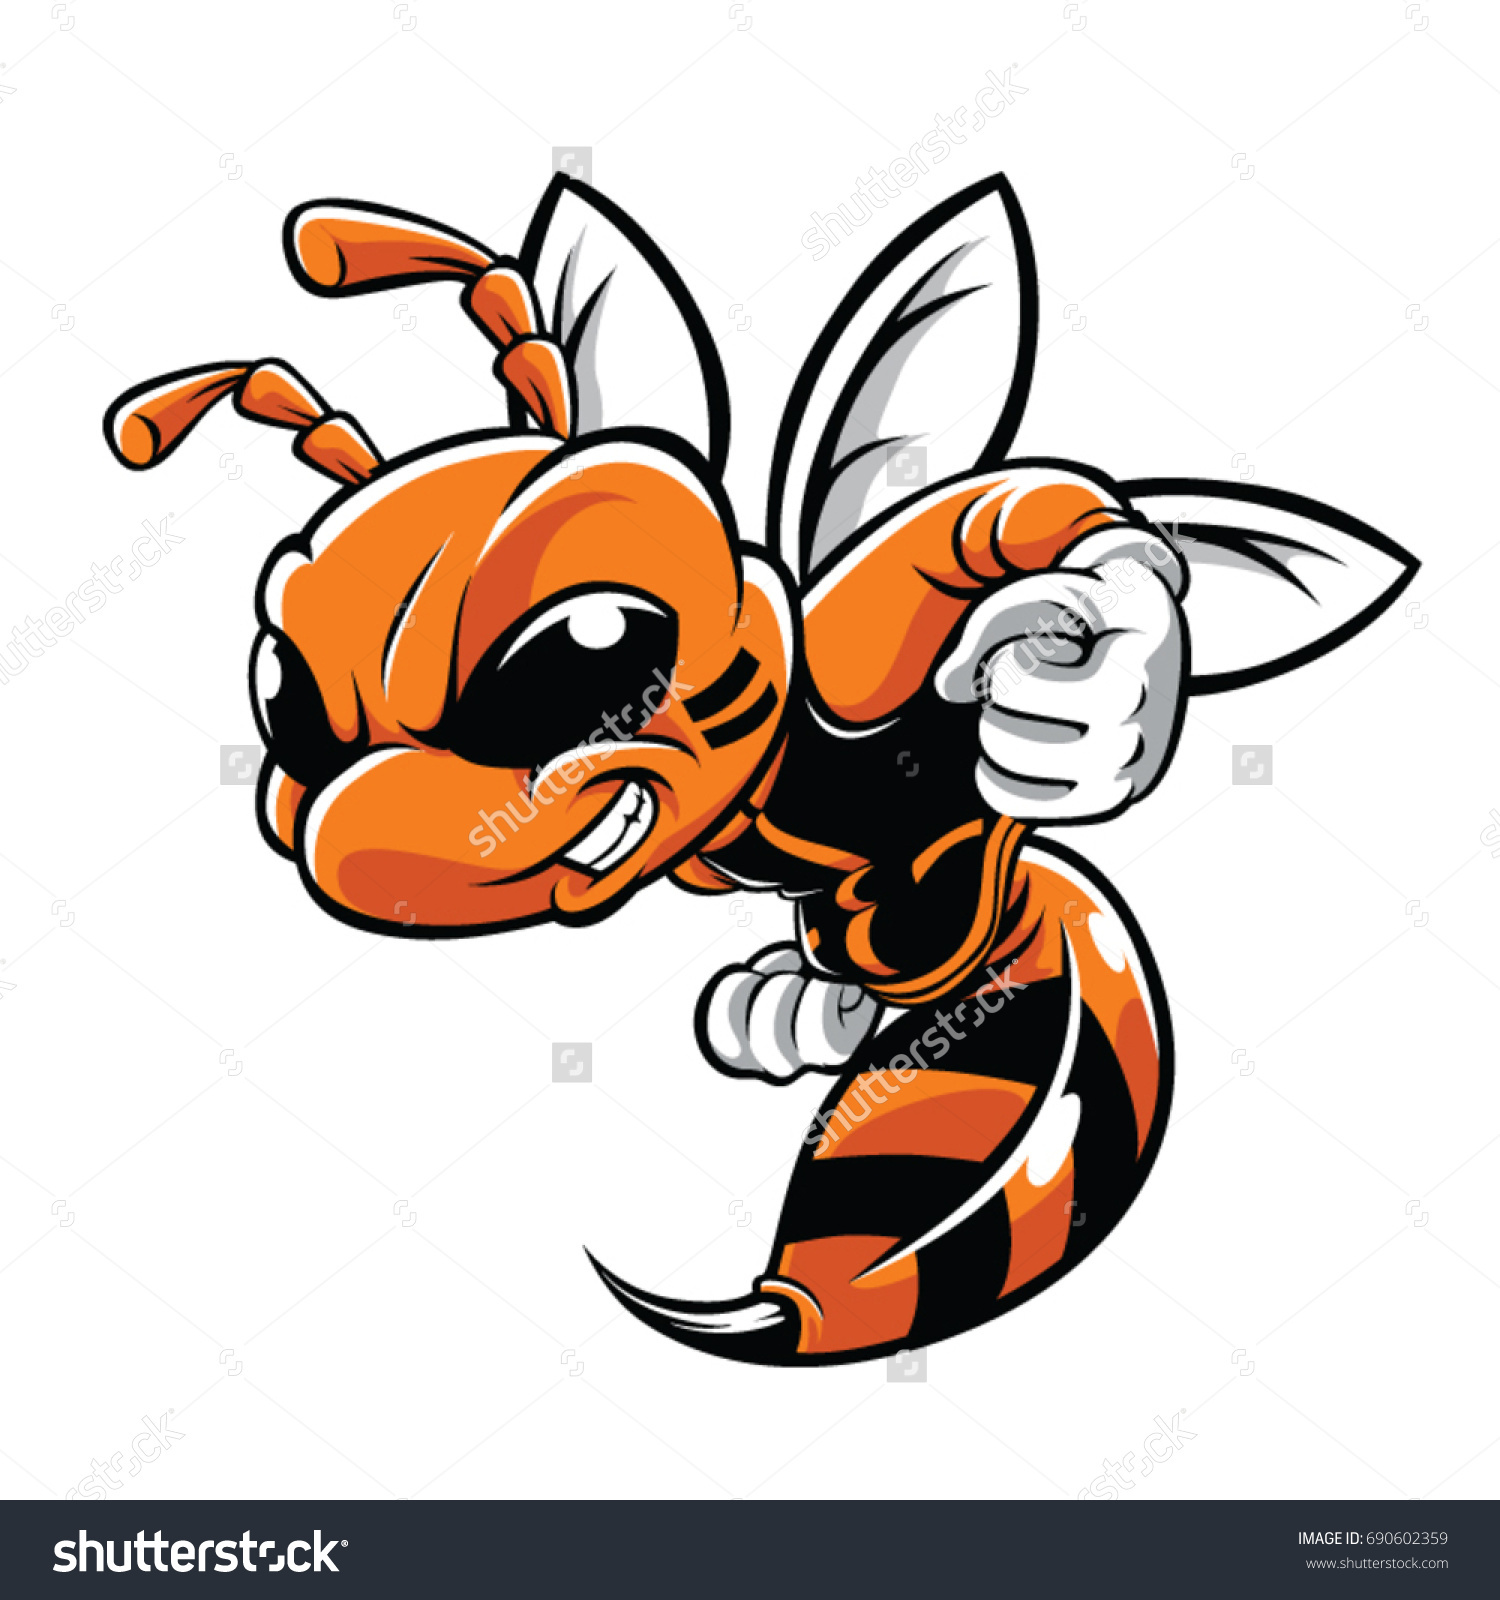 SVG of Orange Hornet Character isolated on white background svg